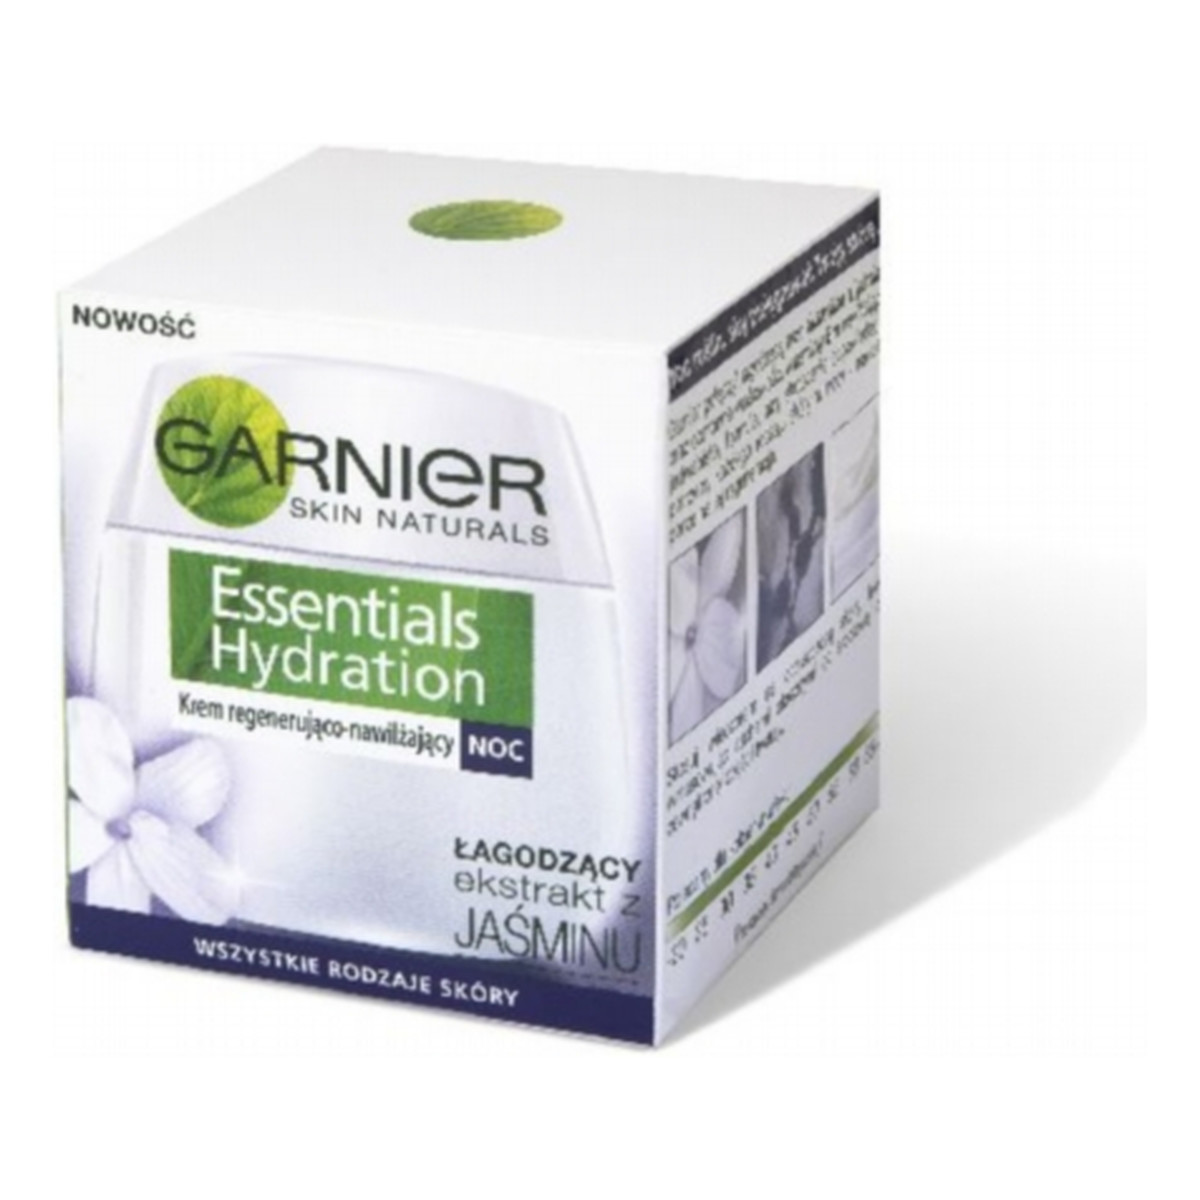 Garnier Essentials Hydration Krem Regenerujący Na Noc 50ml